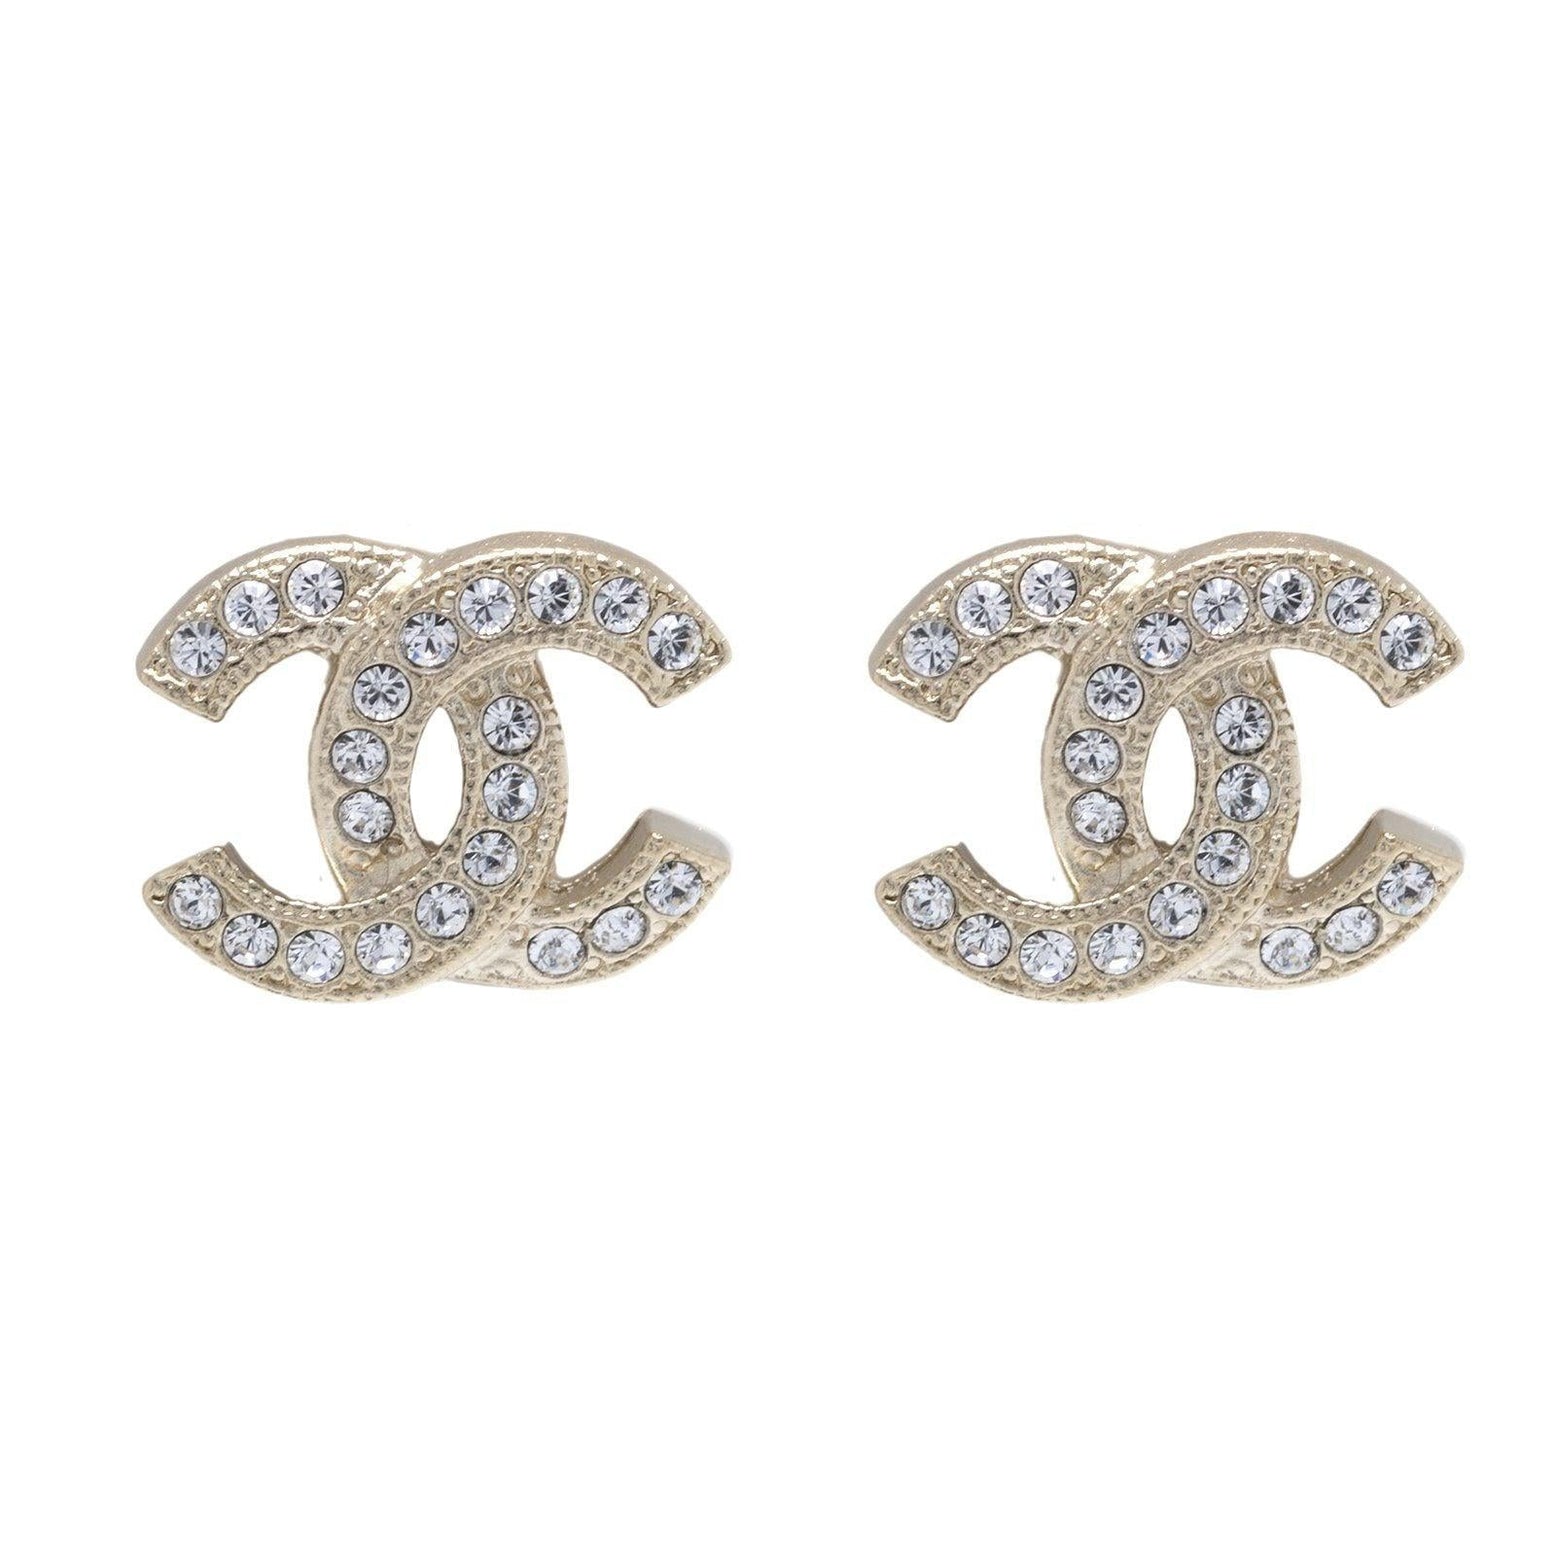 Cc earrings Chanel Pink in Metal  34520515